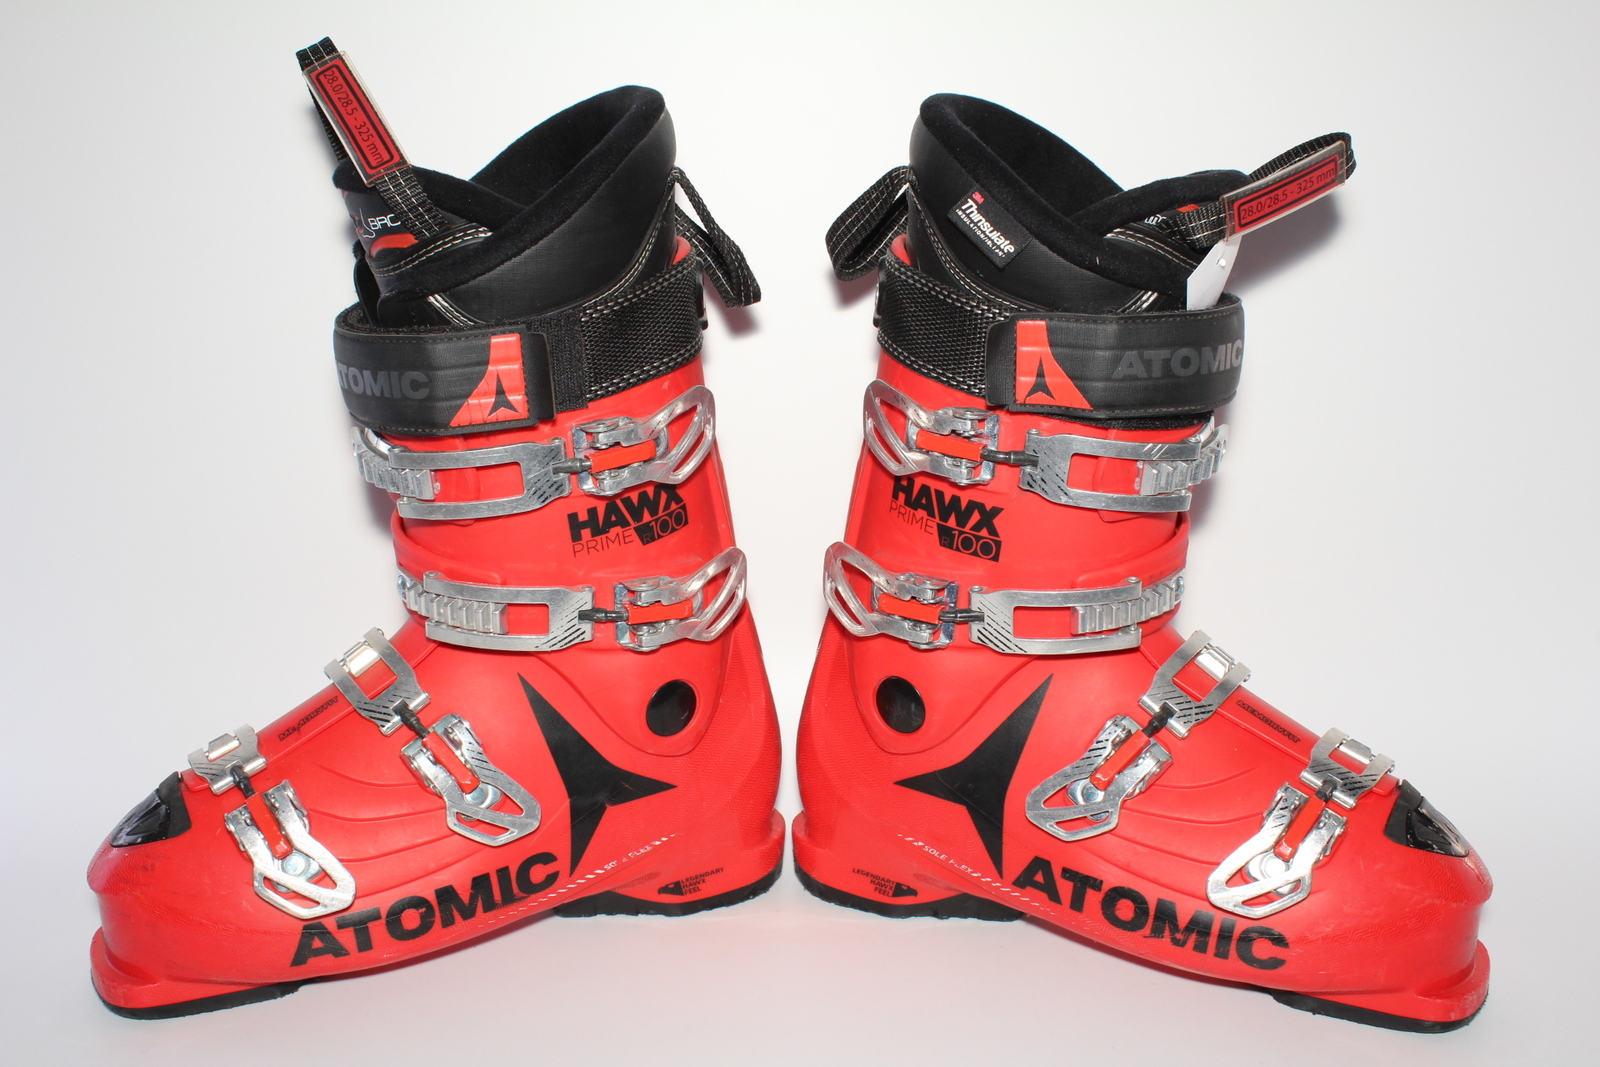 Lyžařské boty Atomic Hawx Prime R 100 vel. EU43 flexe 100